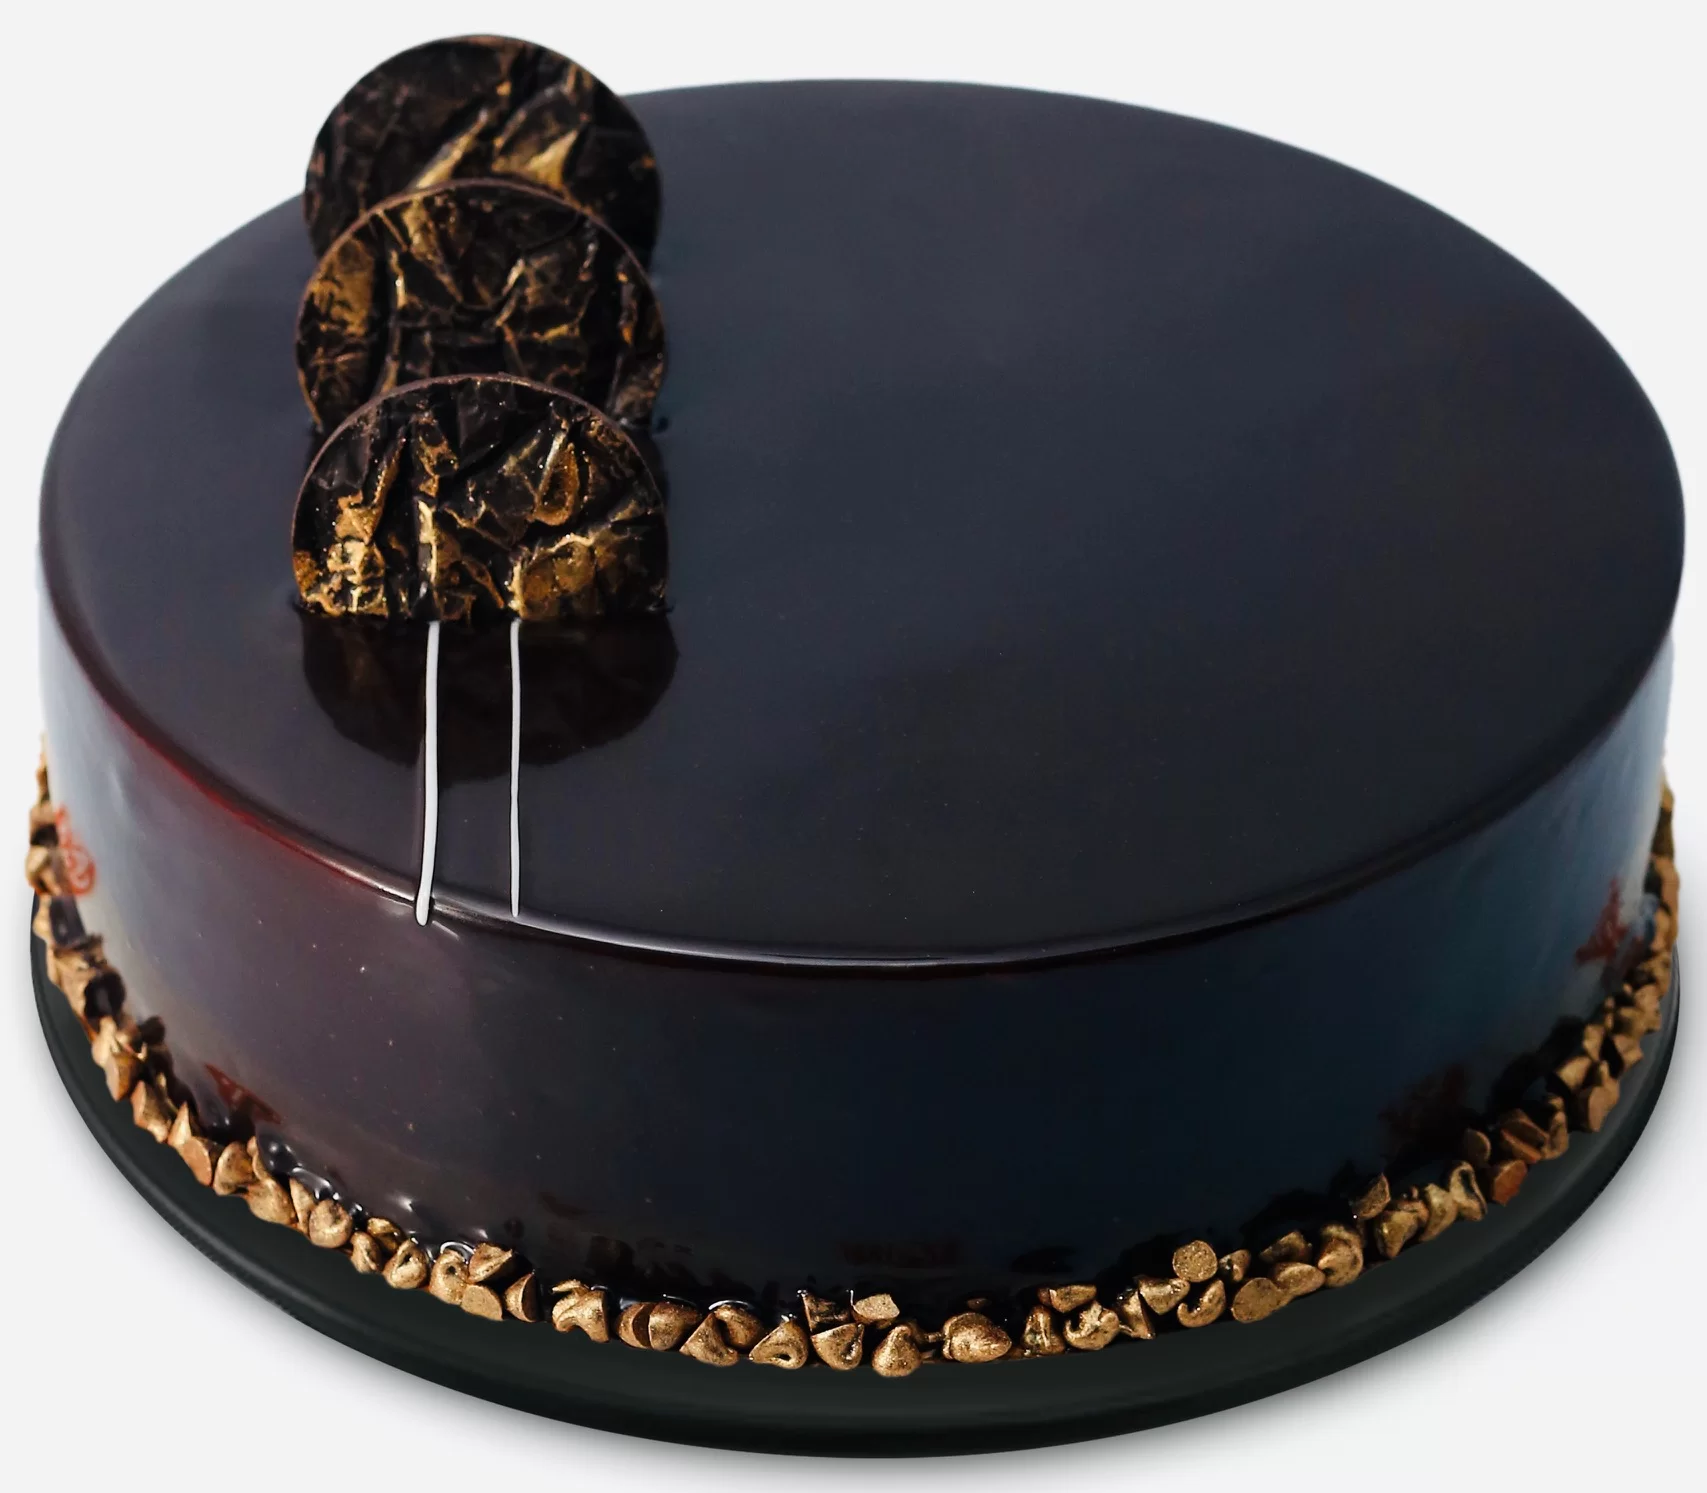 How To Make An Amazing Easy Chocolate Truffle Cake - CakeZone Blog